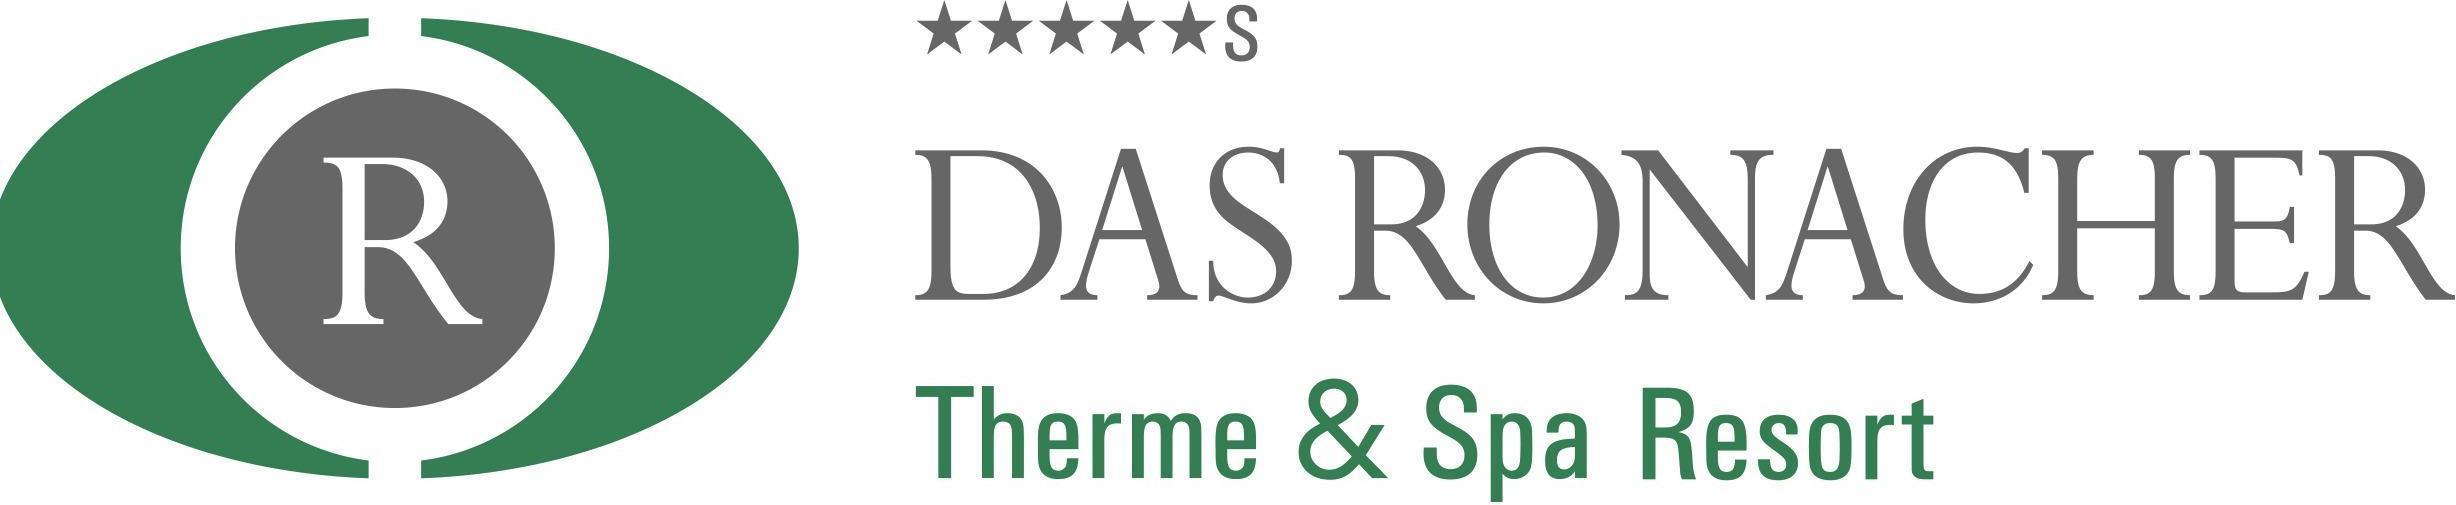 Logo DAS RONACHER Therme & Spa Resort, Familie Ronacher GmbH